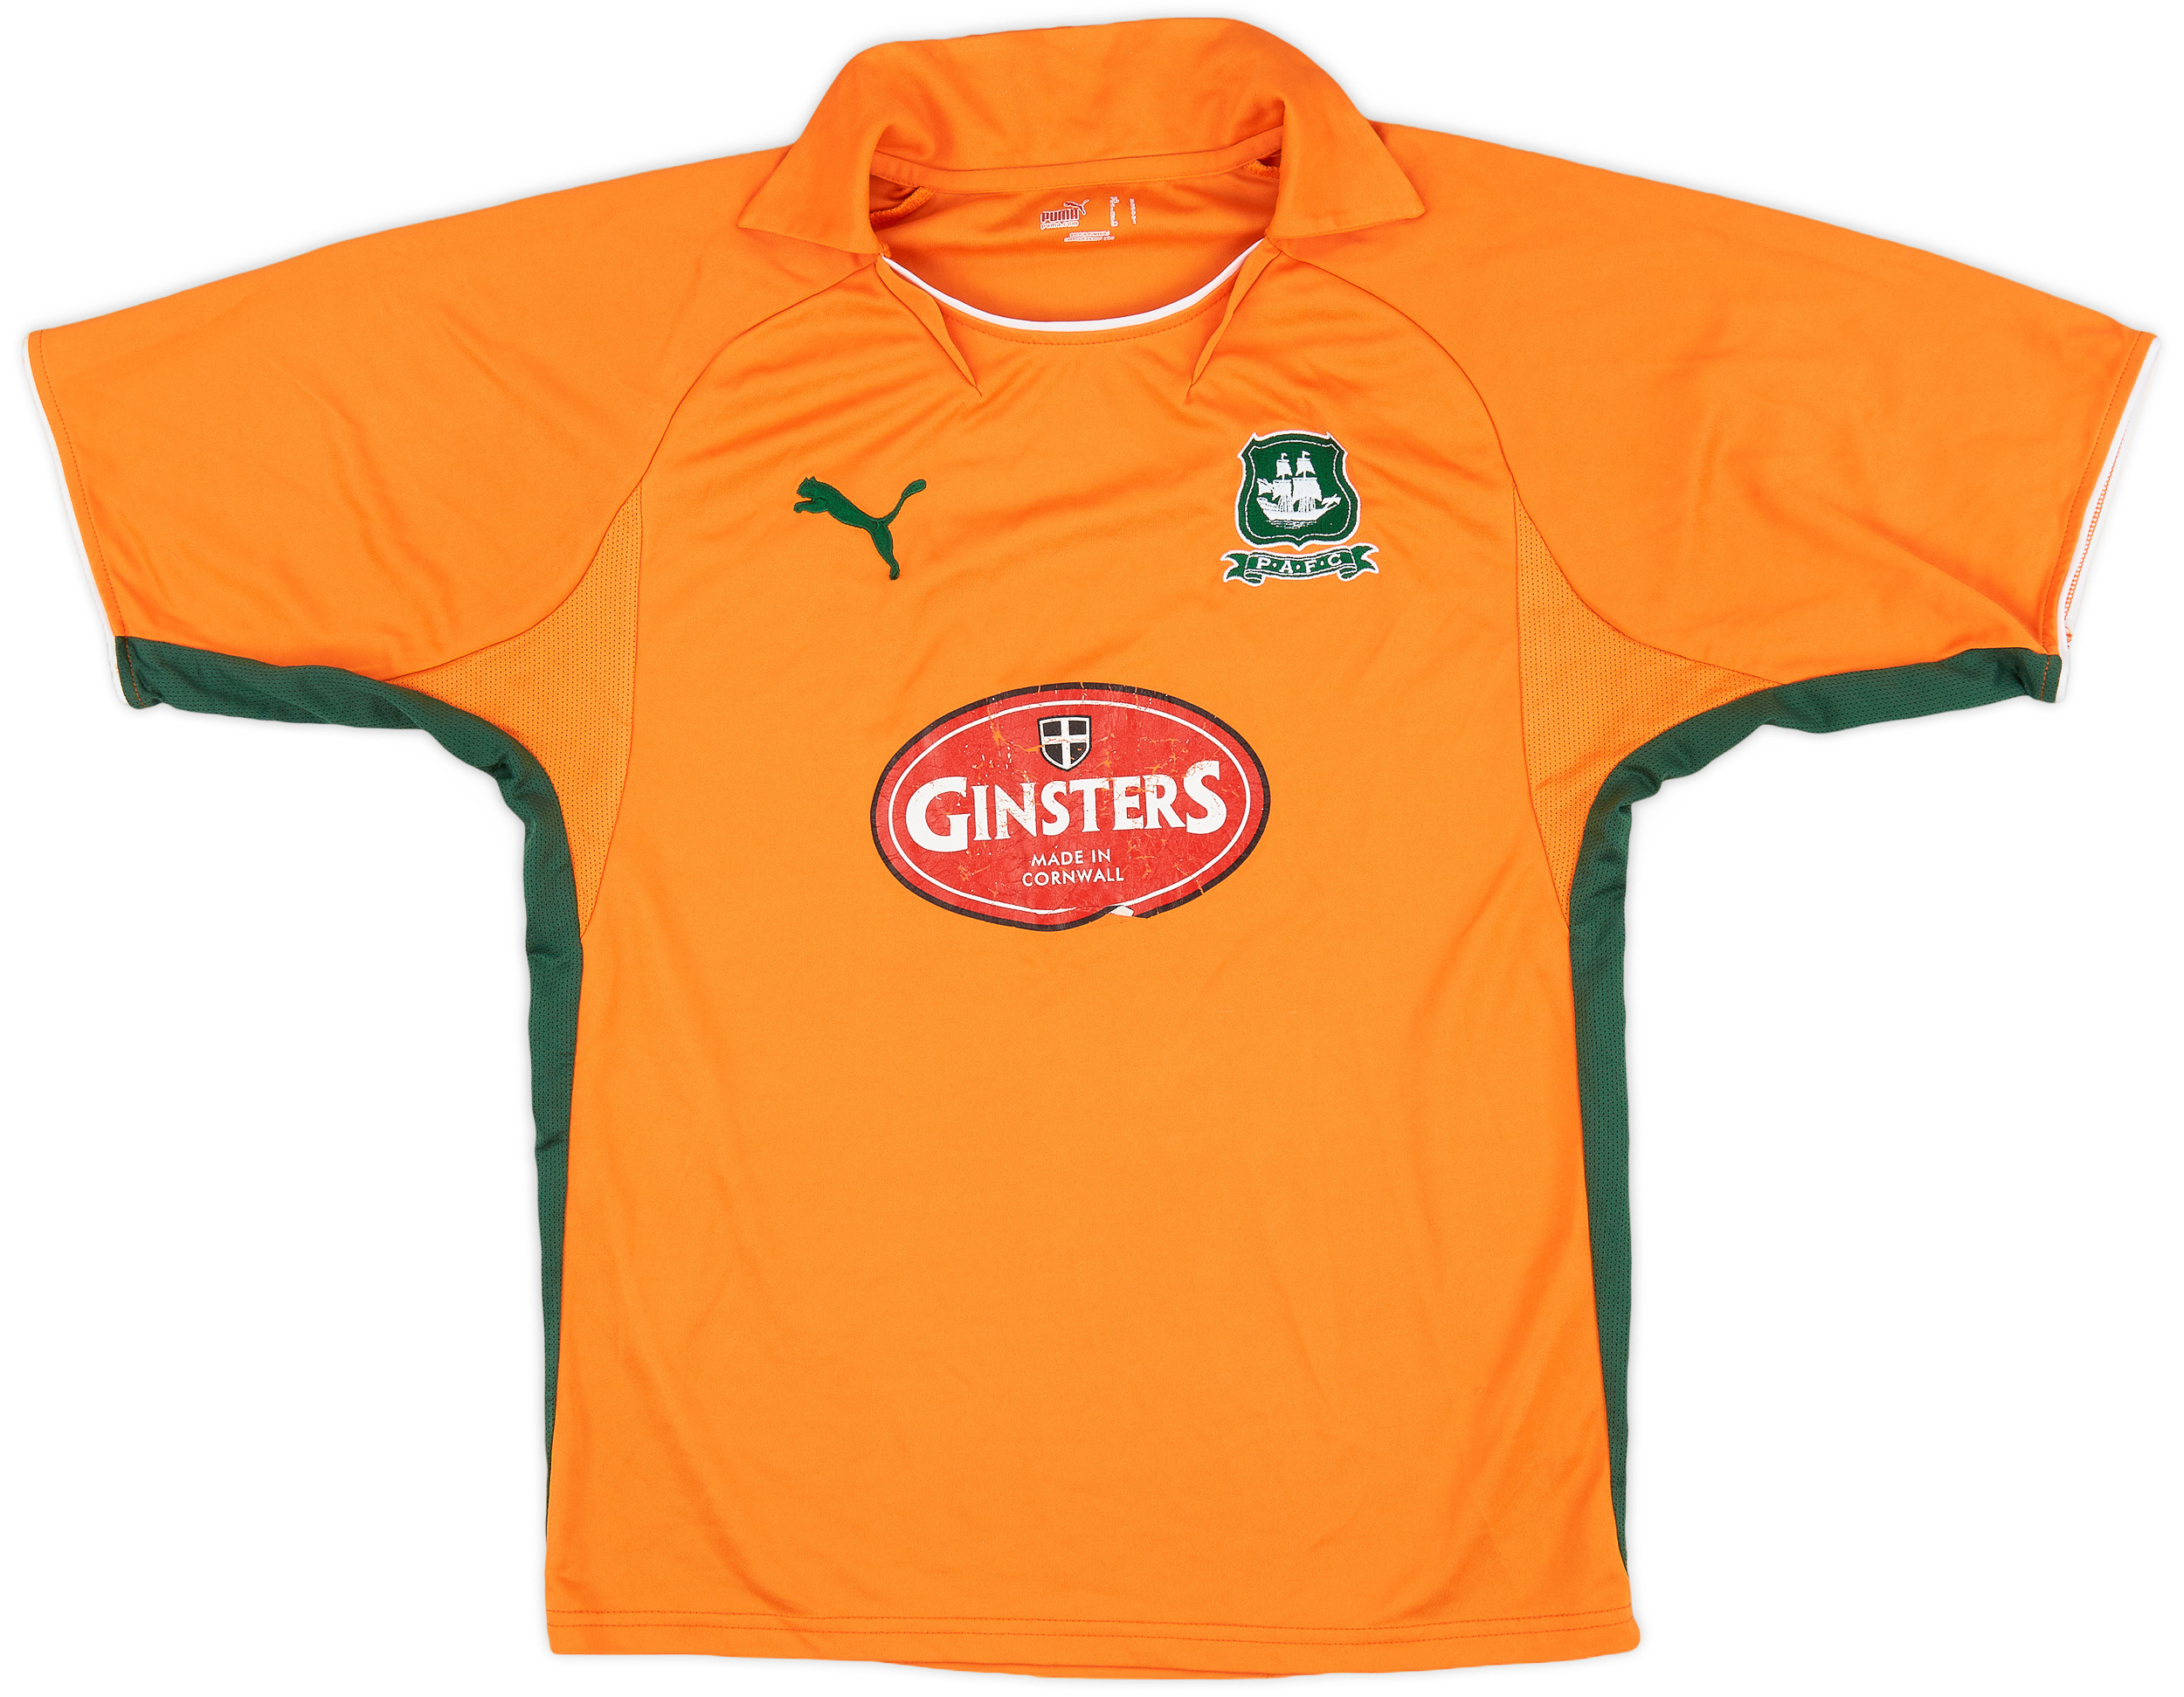 2008-09 Plymouth Away Shirt - 5/10 - ()